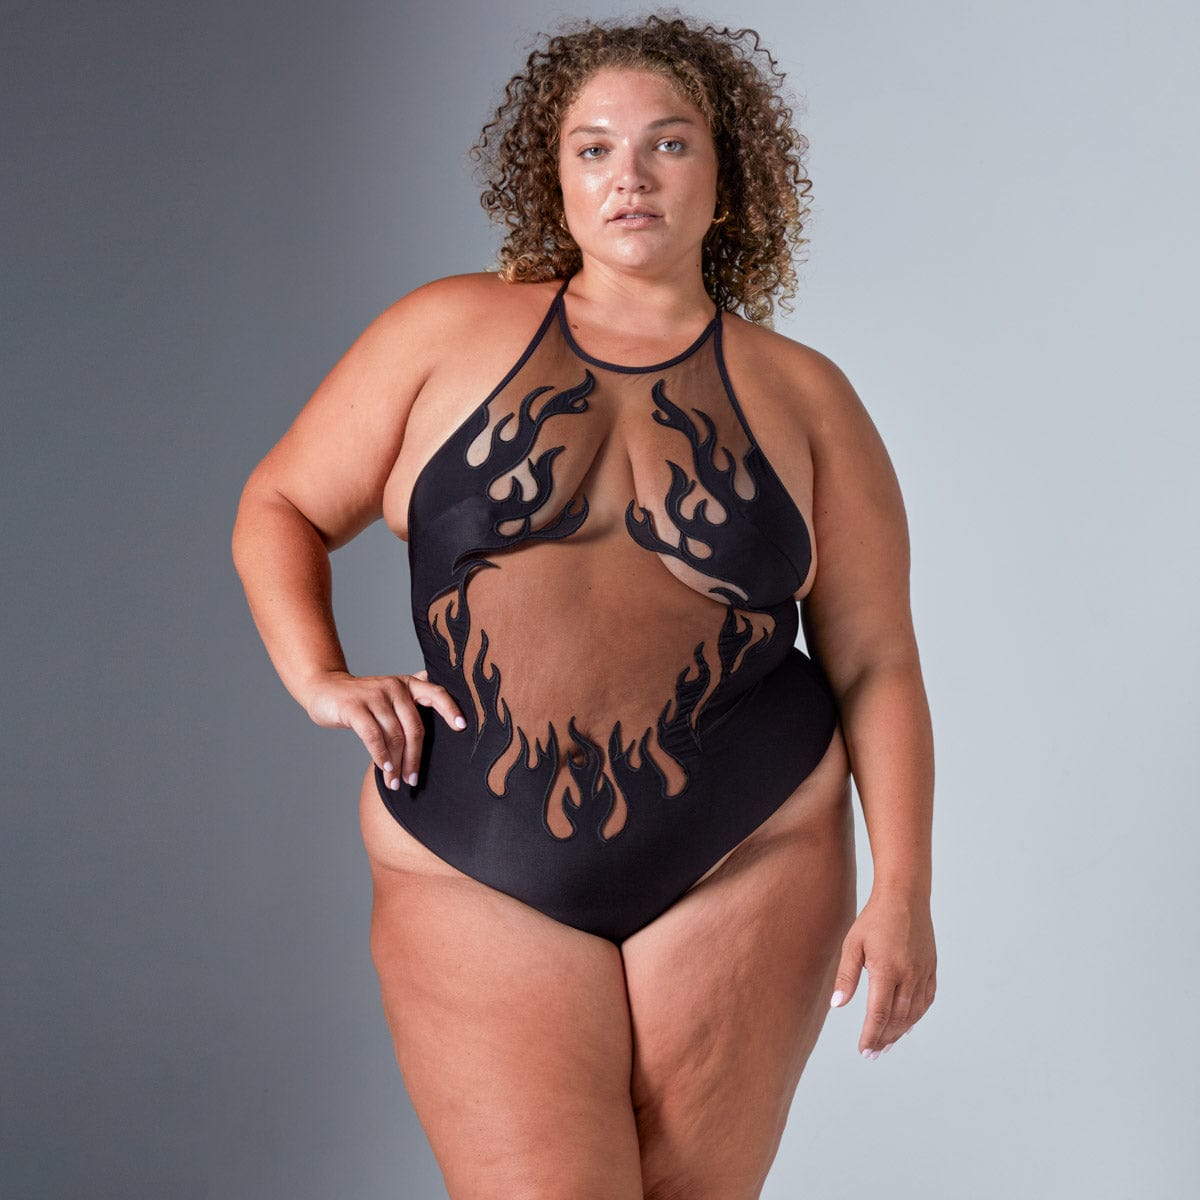 Thistle and Spire Women's Smokin' Mirrors Bodysuit, Black, 3X